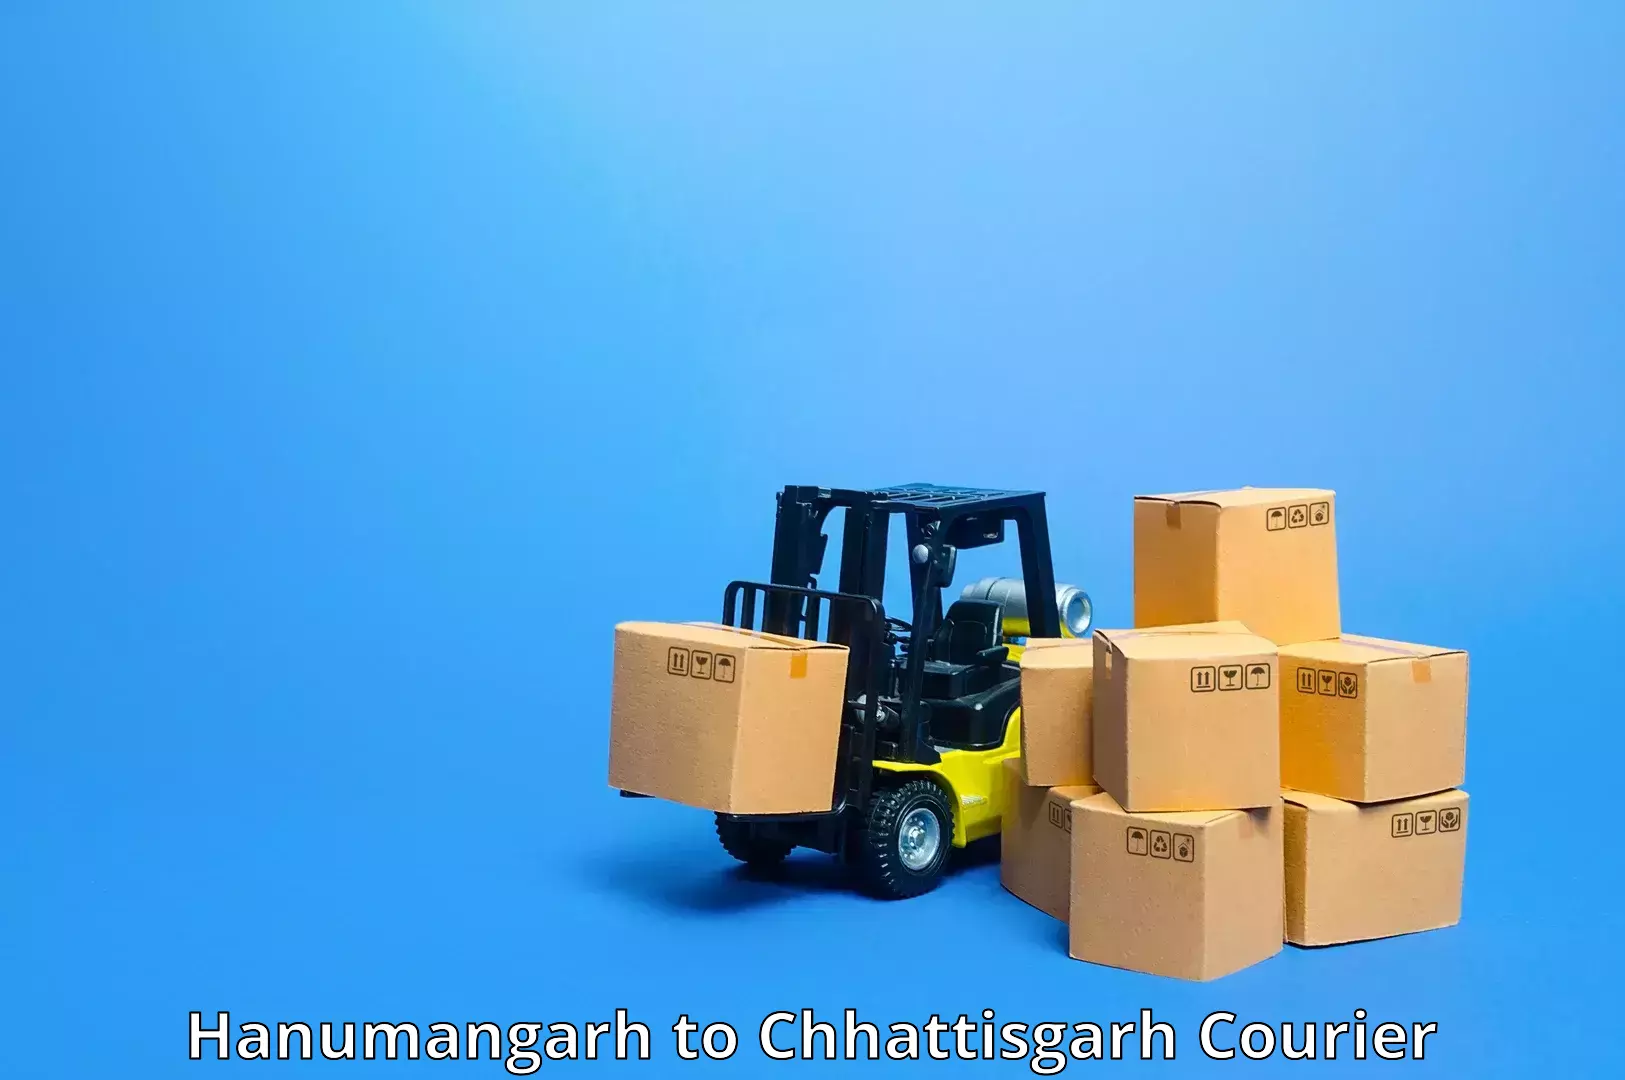 Advanced tracking systems Hanumangarh to Chhattisgarh